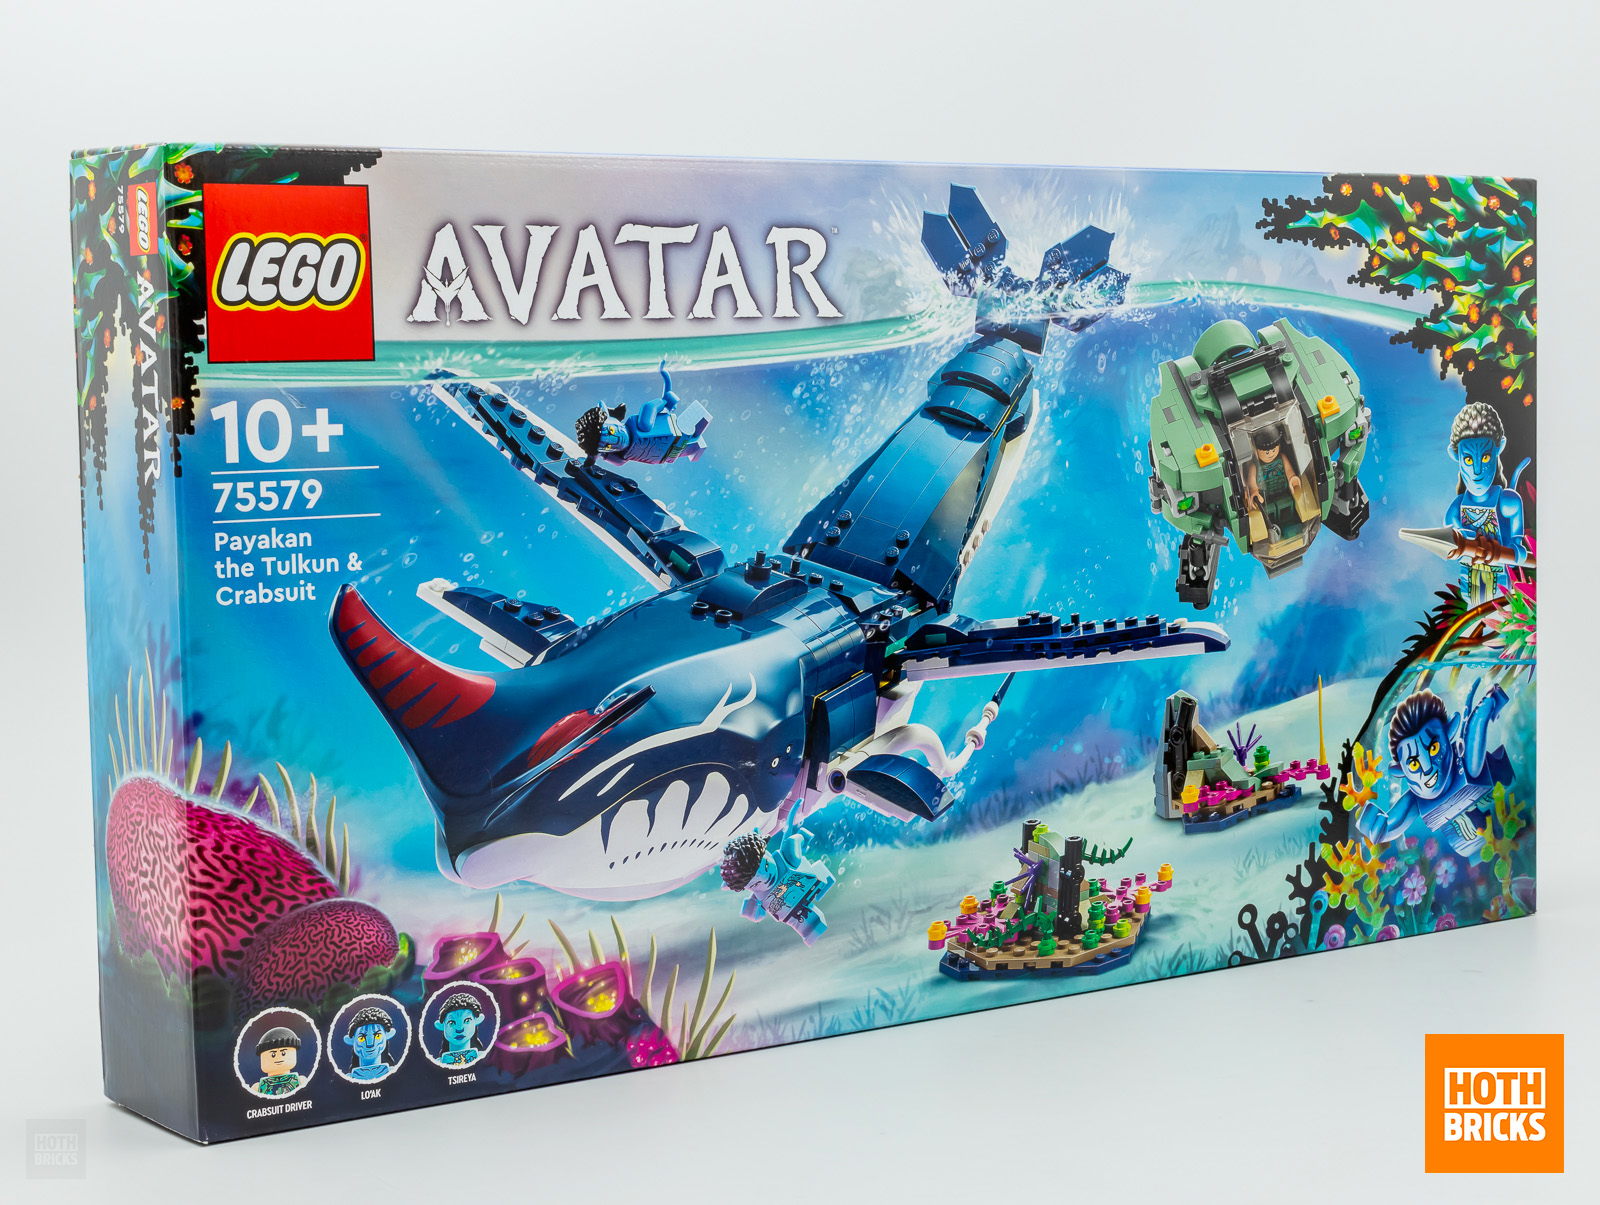 Състезание: копие на комплекта LEGO Avatar 75579 Payakan The Tulkun & Crabsuit ще бъде спечелено!